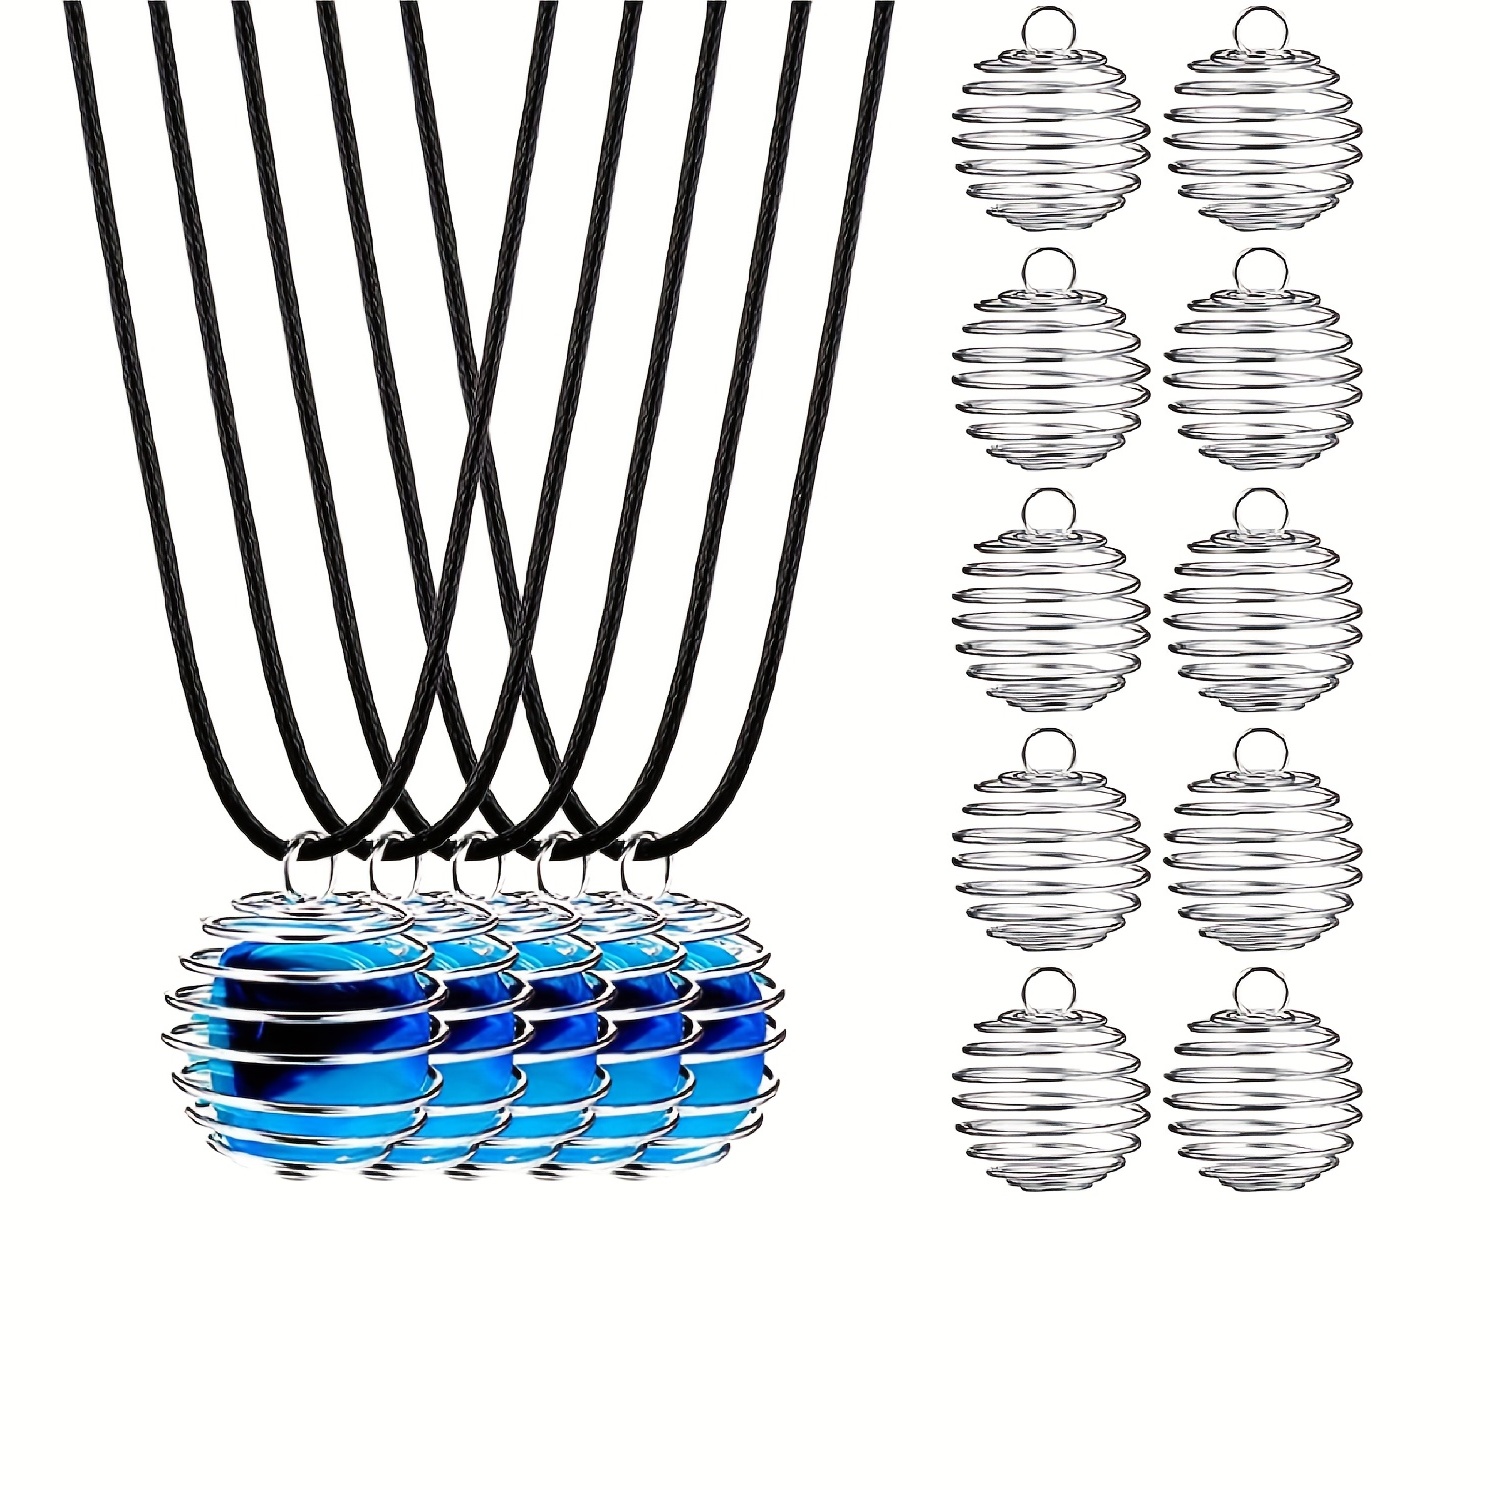 60Pcs Spiral Bead Cage Pendant Crystal Holder for Necklace Making Crystal  Holder